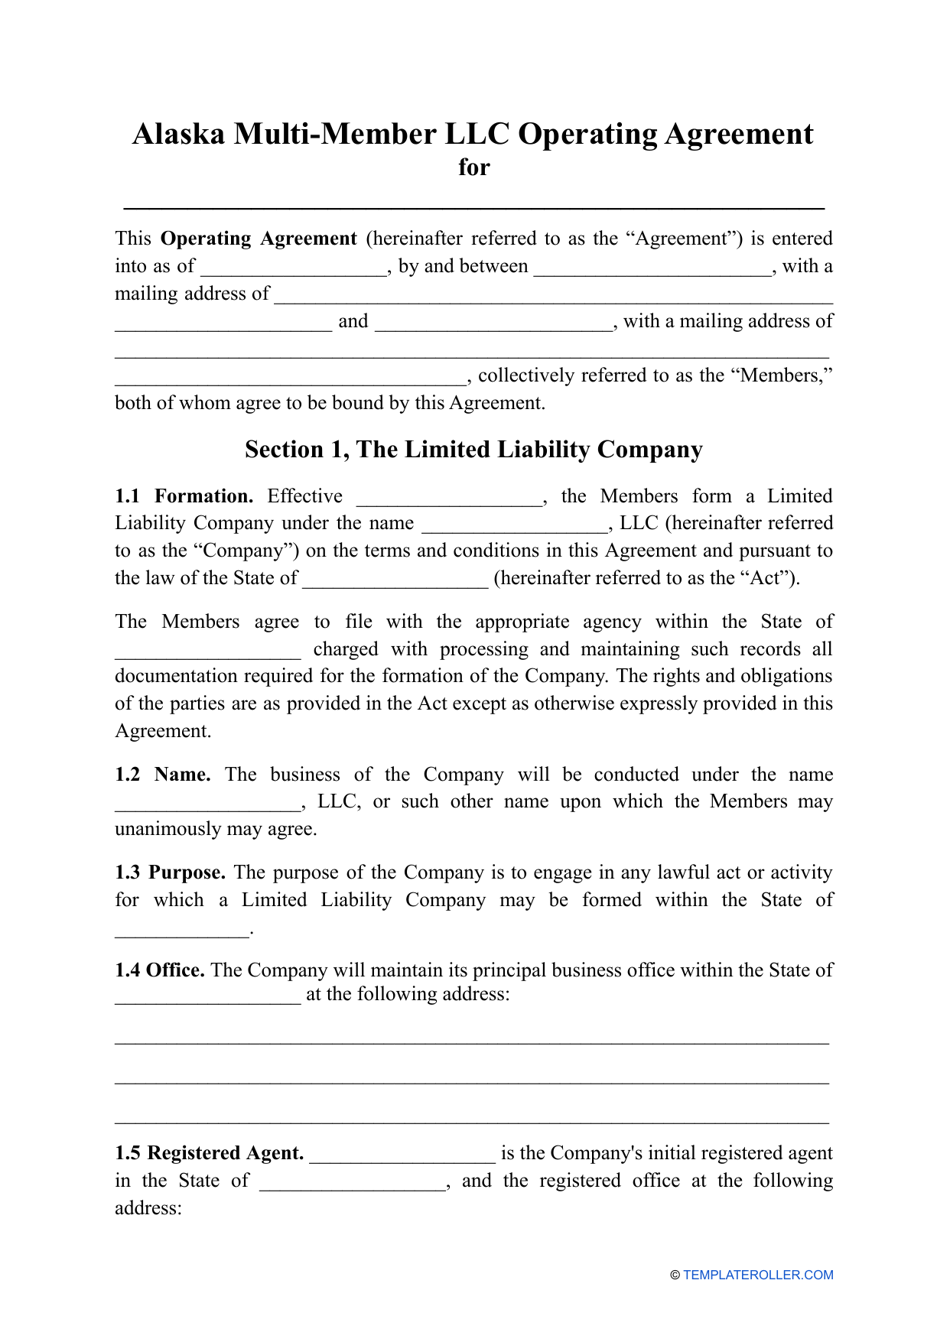 Multi-Member LLC Operating Agreement Template - Alaska, Page 1